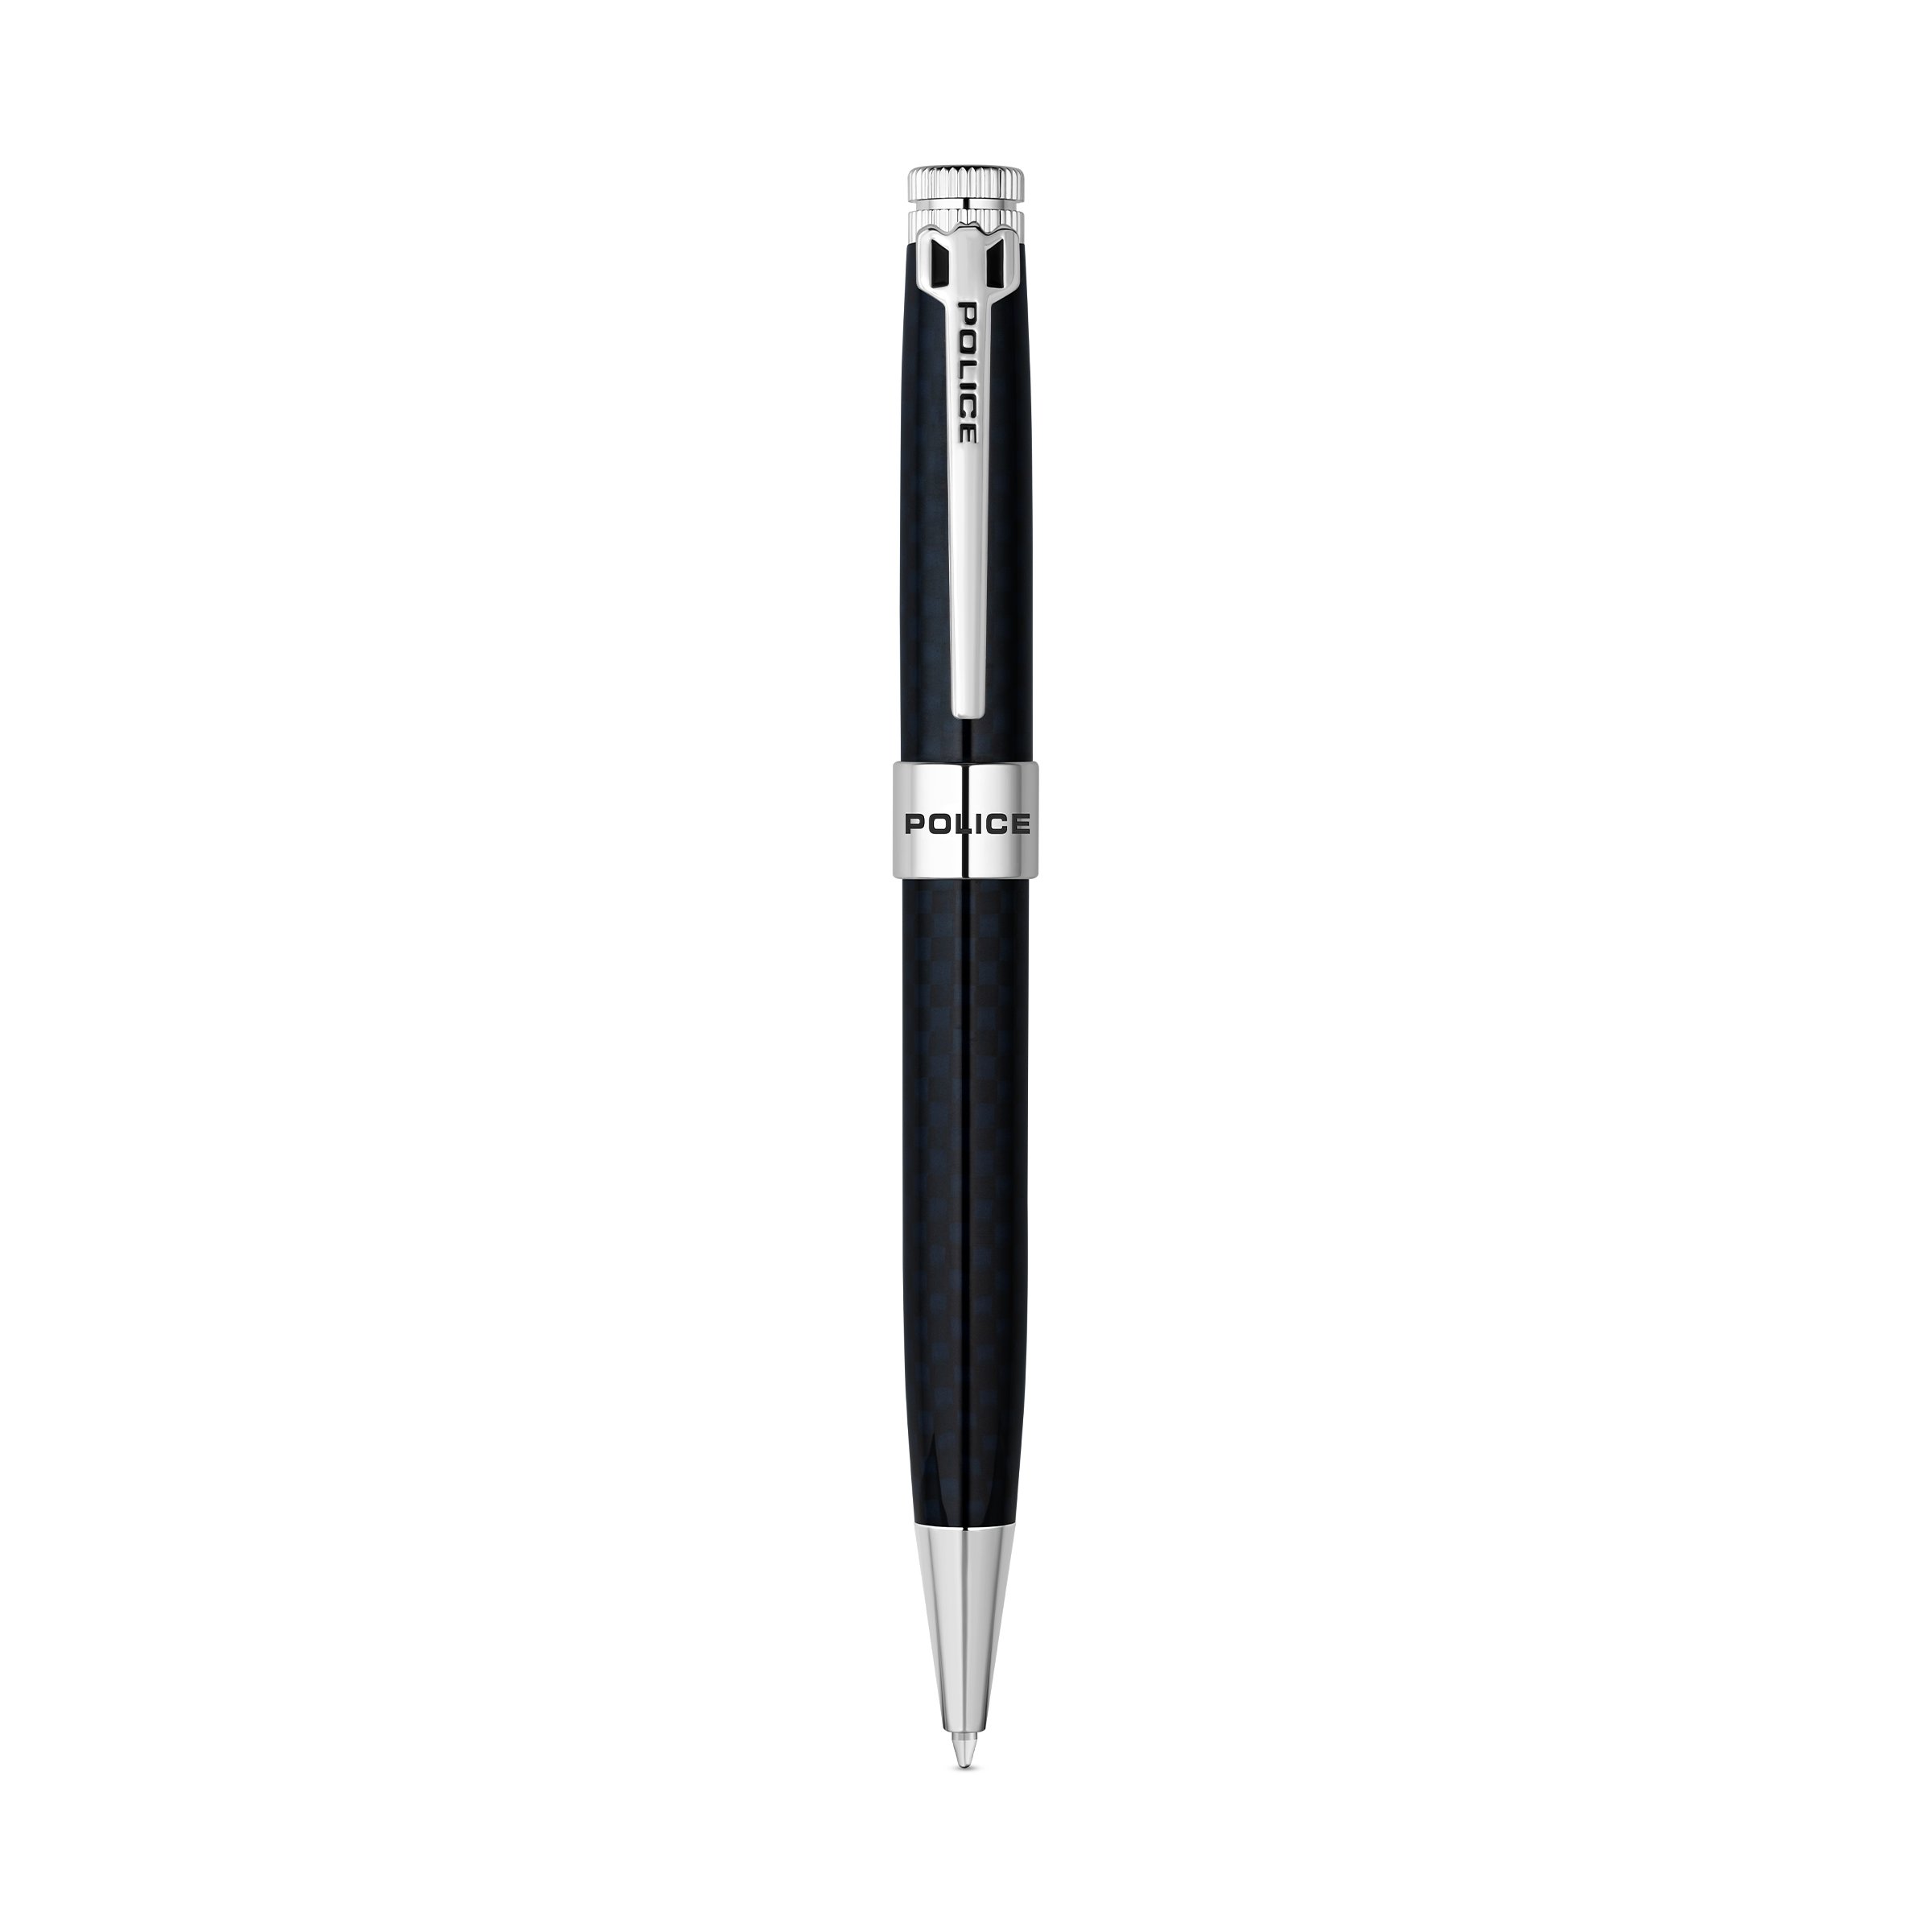 POLICE - Constantia Pen For Men Black & Gunmetal Color, Ball Point - PERGR0002801